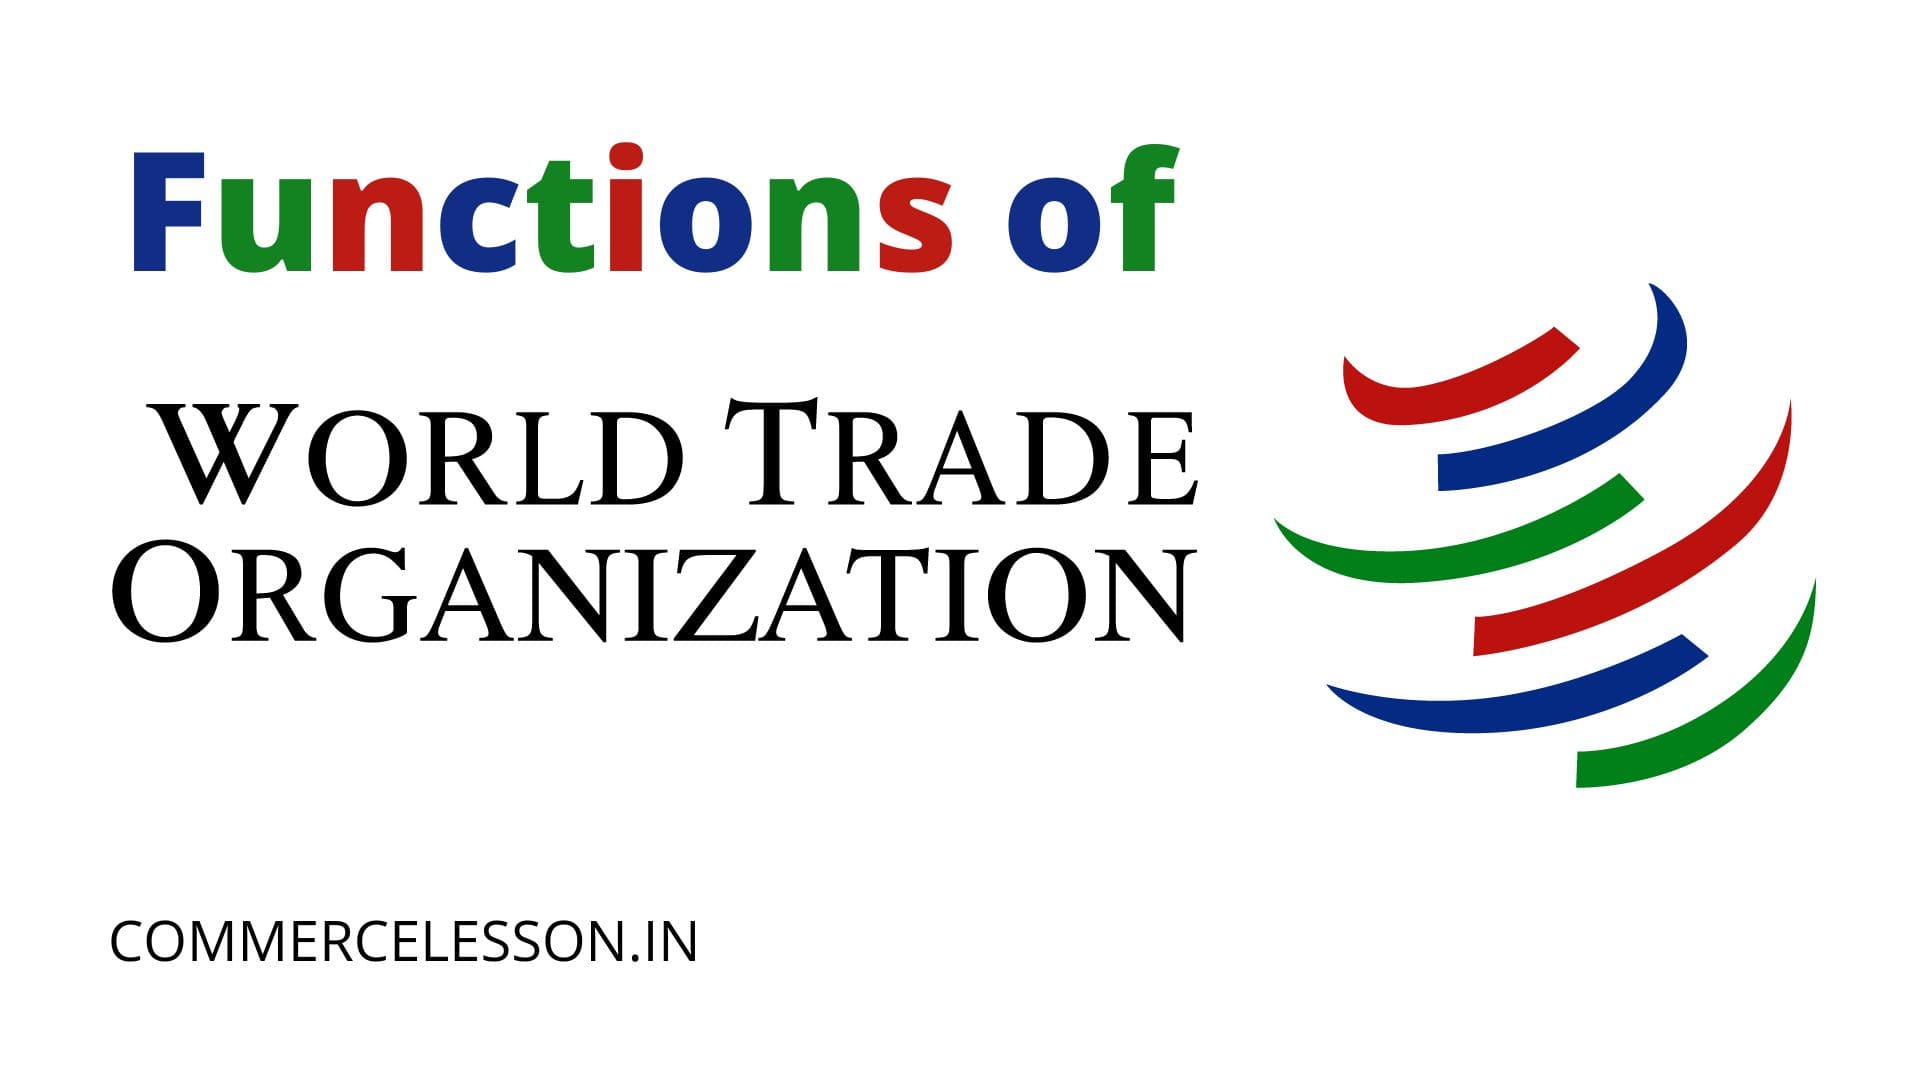 Functions of World Trade Organization